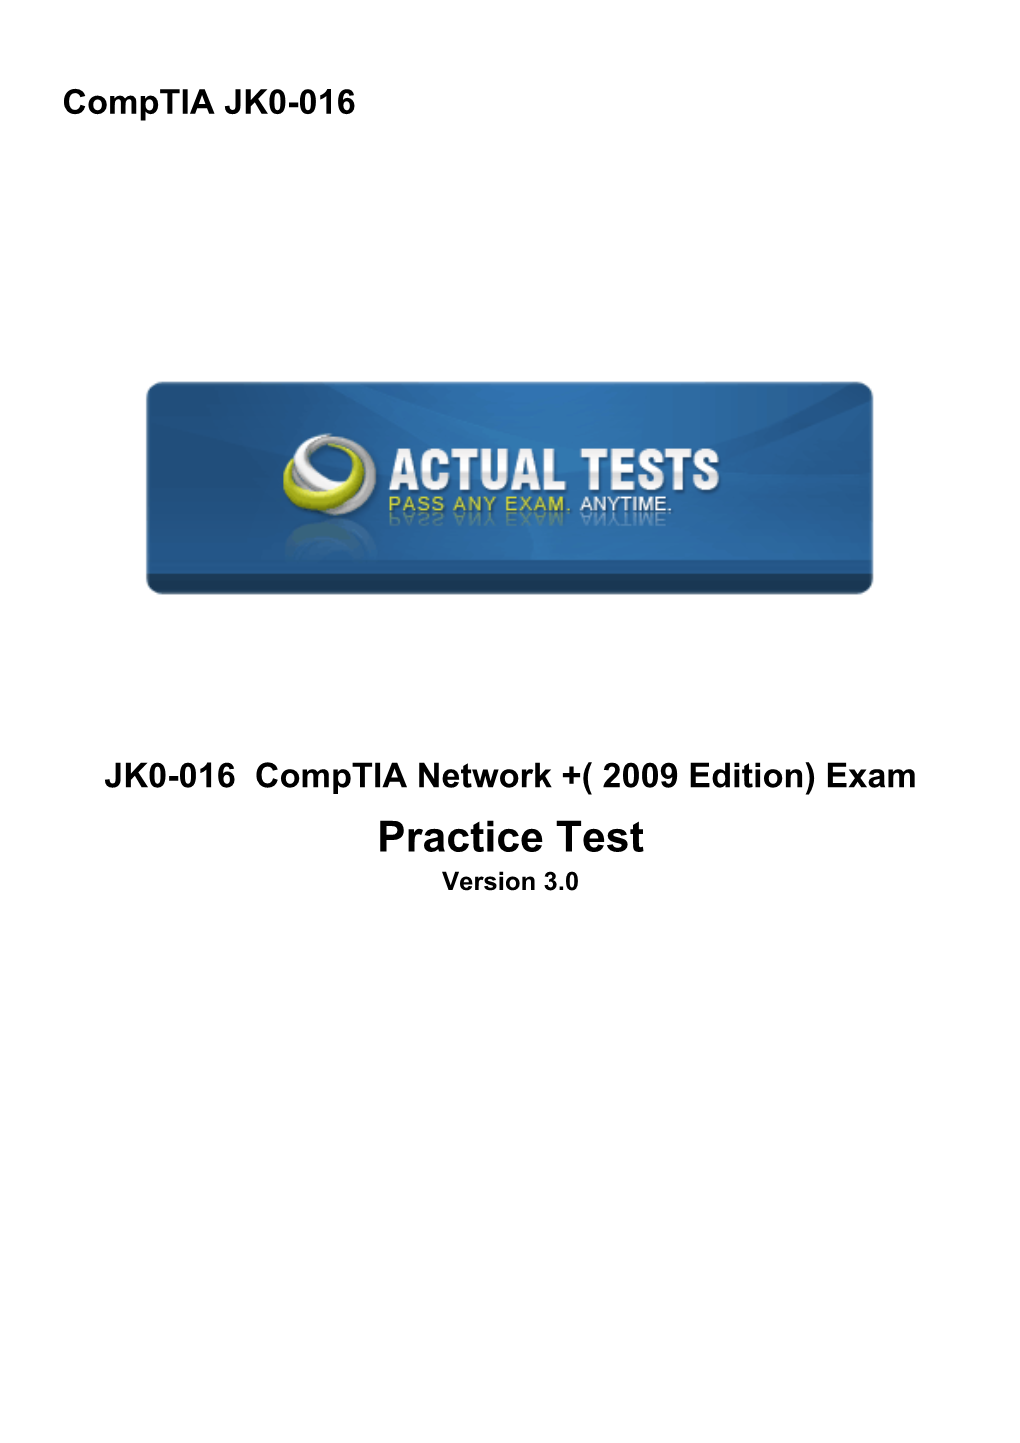 Practice Test Version 3.0 Comptia JK0-016: Practice Exam QUESTION NO: 1